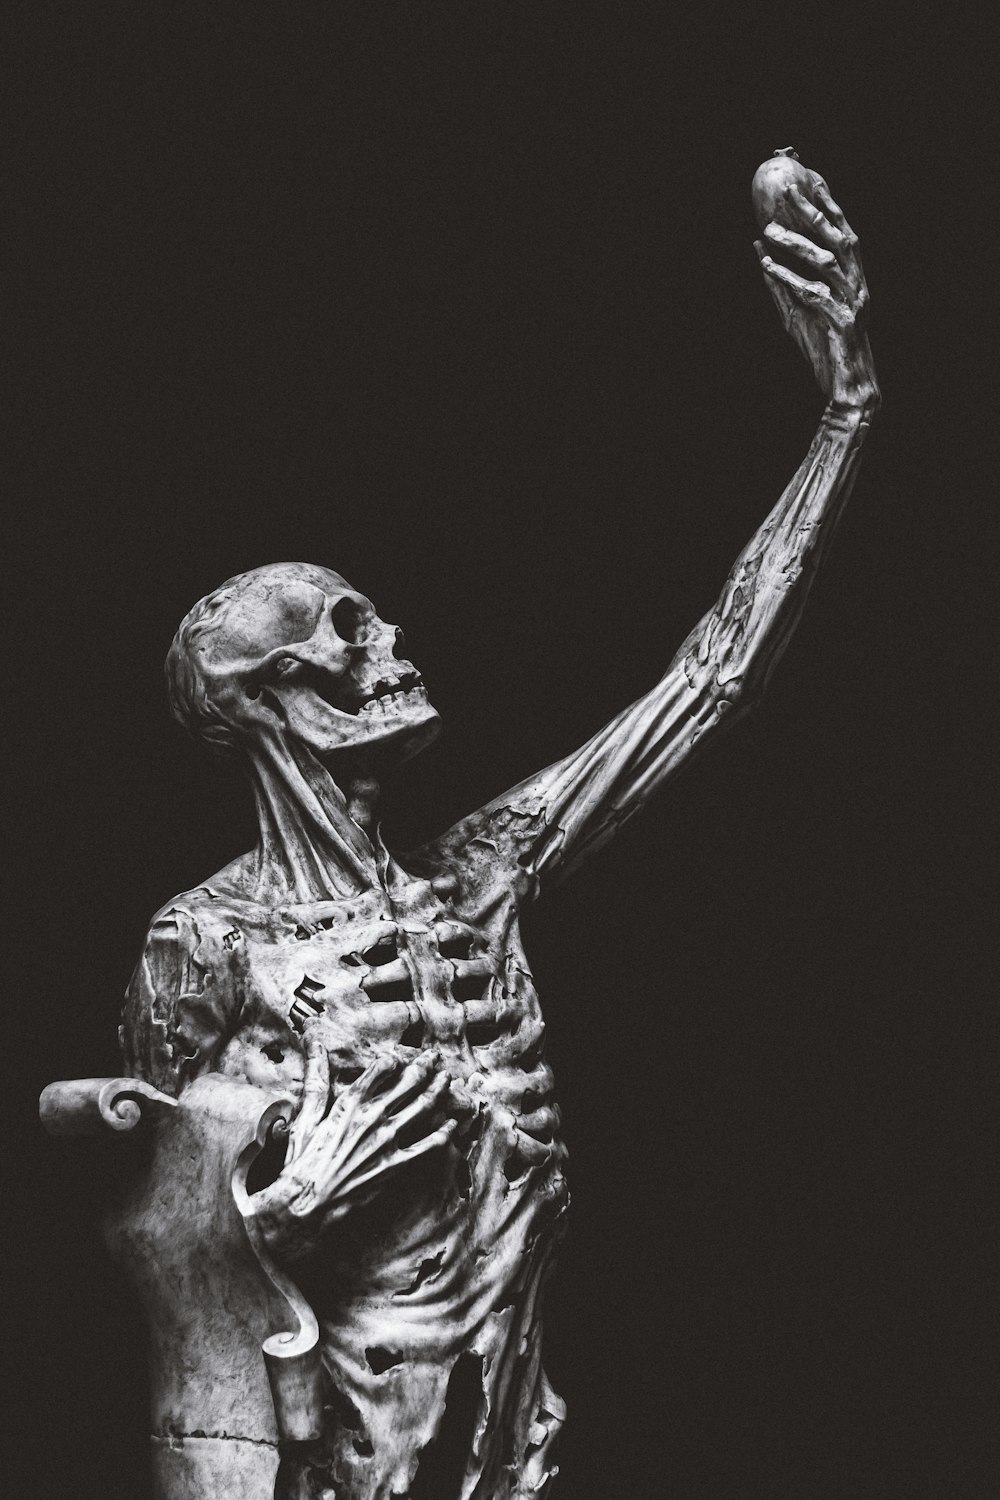 Human Skeleton Pictures Download Free Images On Unsplash